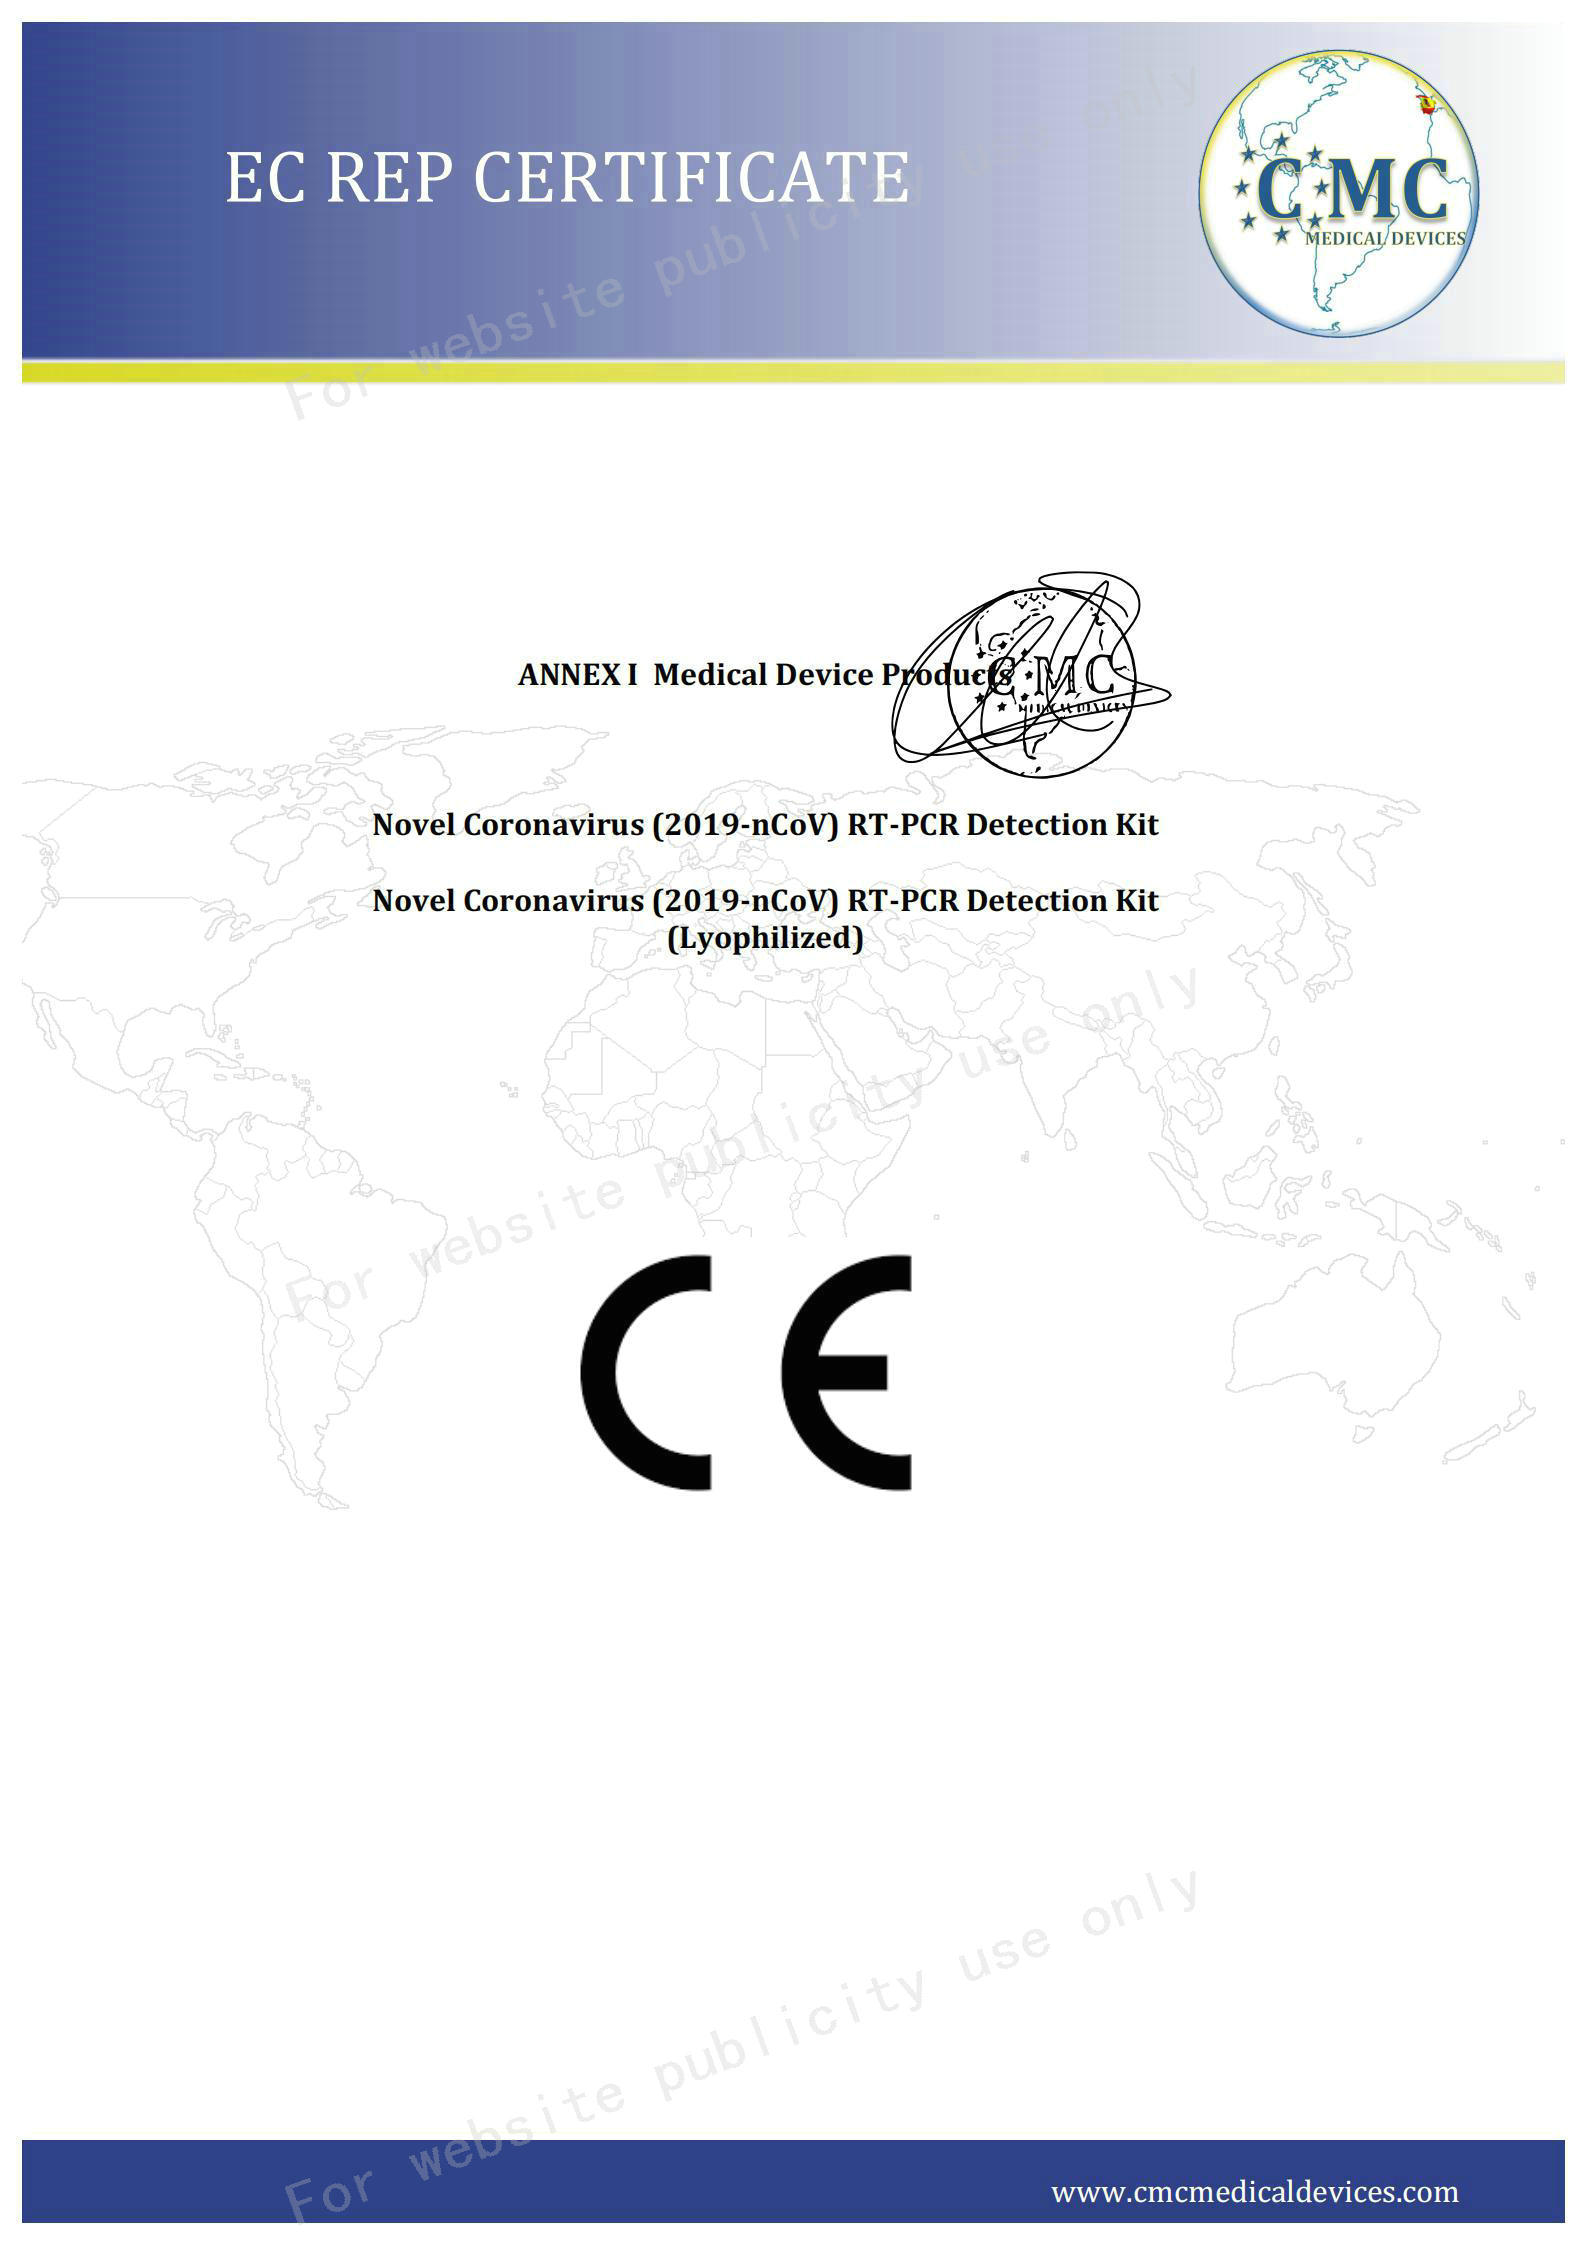 02 CE certifikat stran2